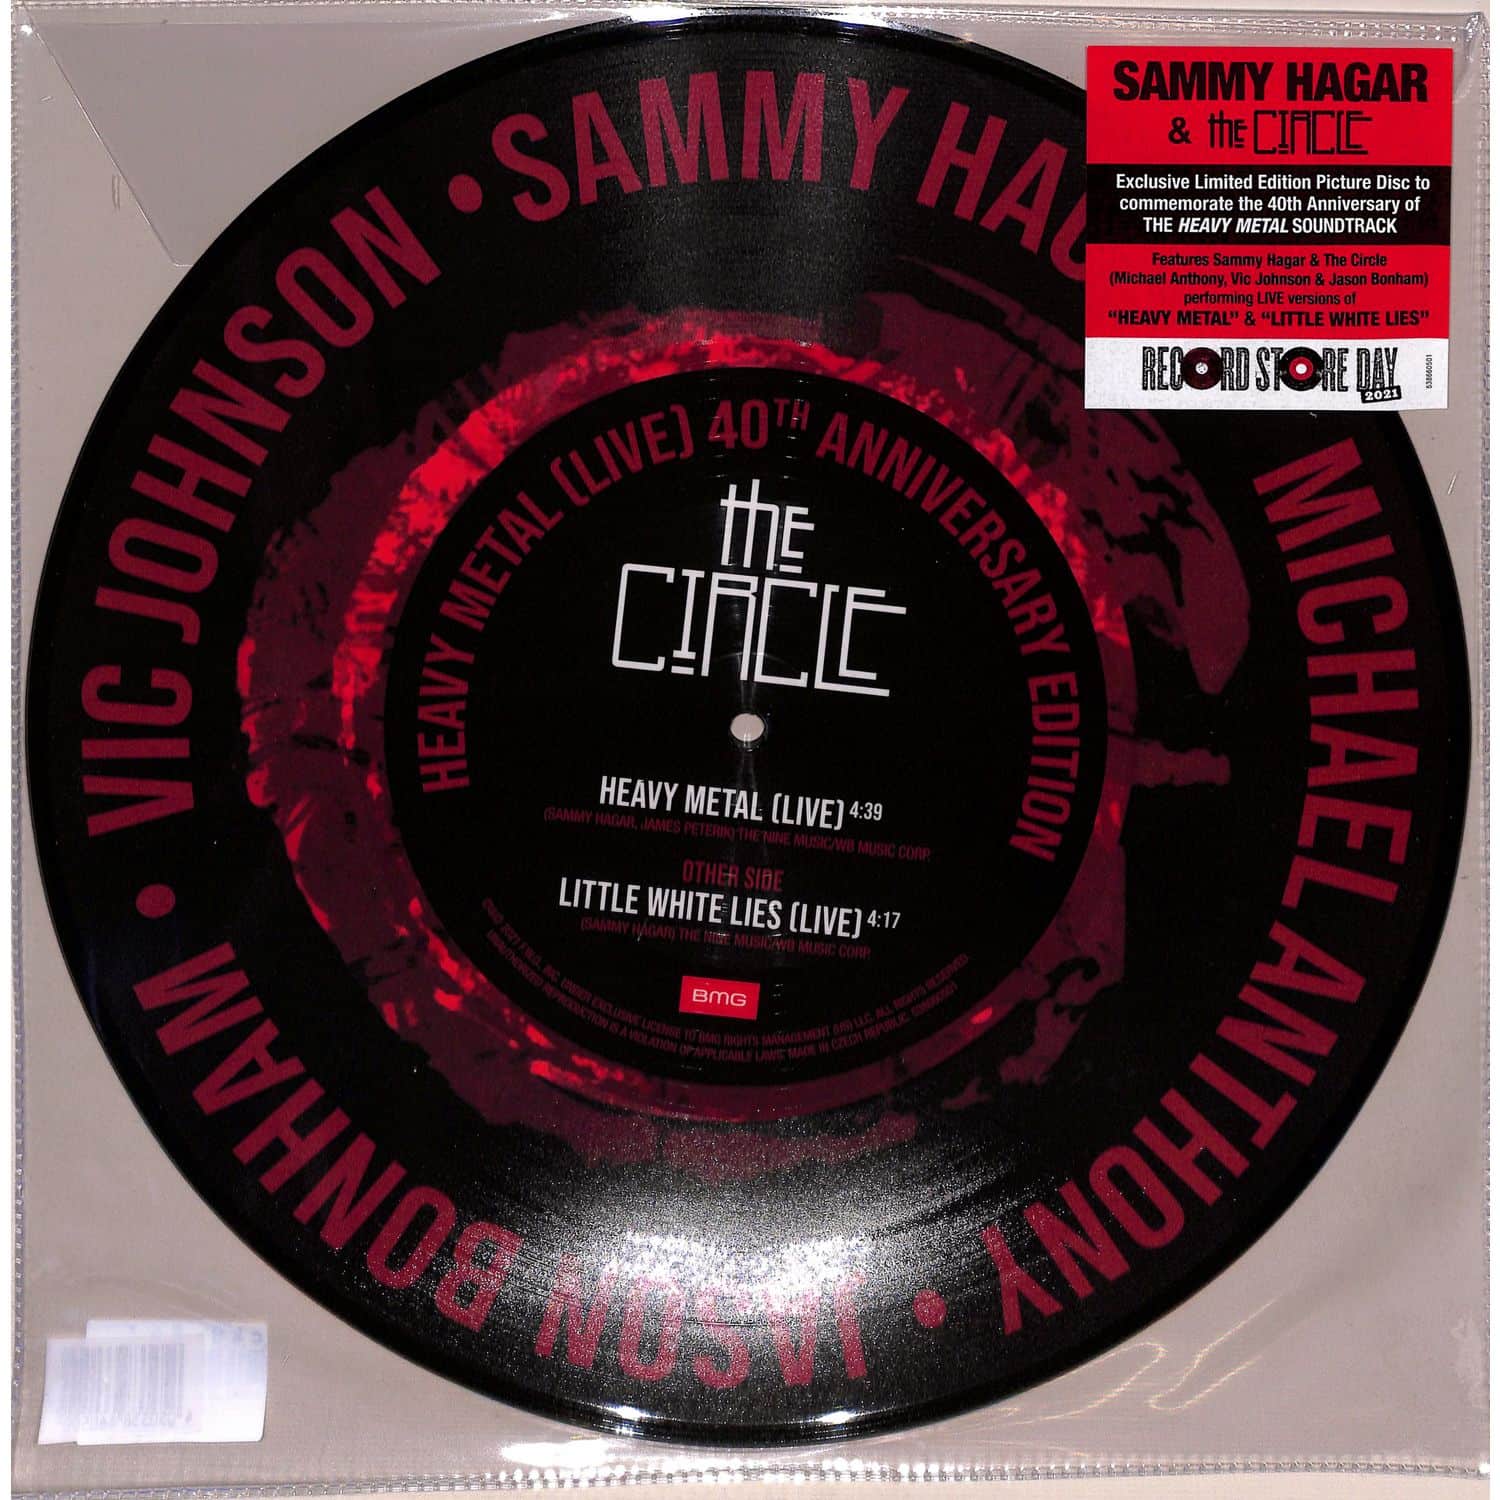 Sammy Hagar & The Circle - HEAVY METAL / LITTLE WHITE LIES 